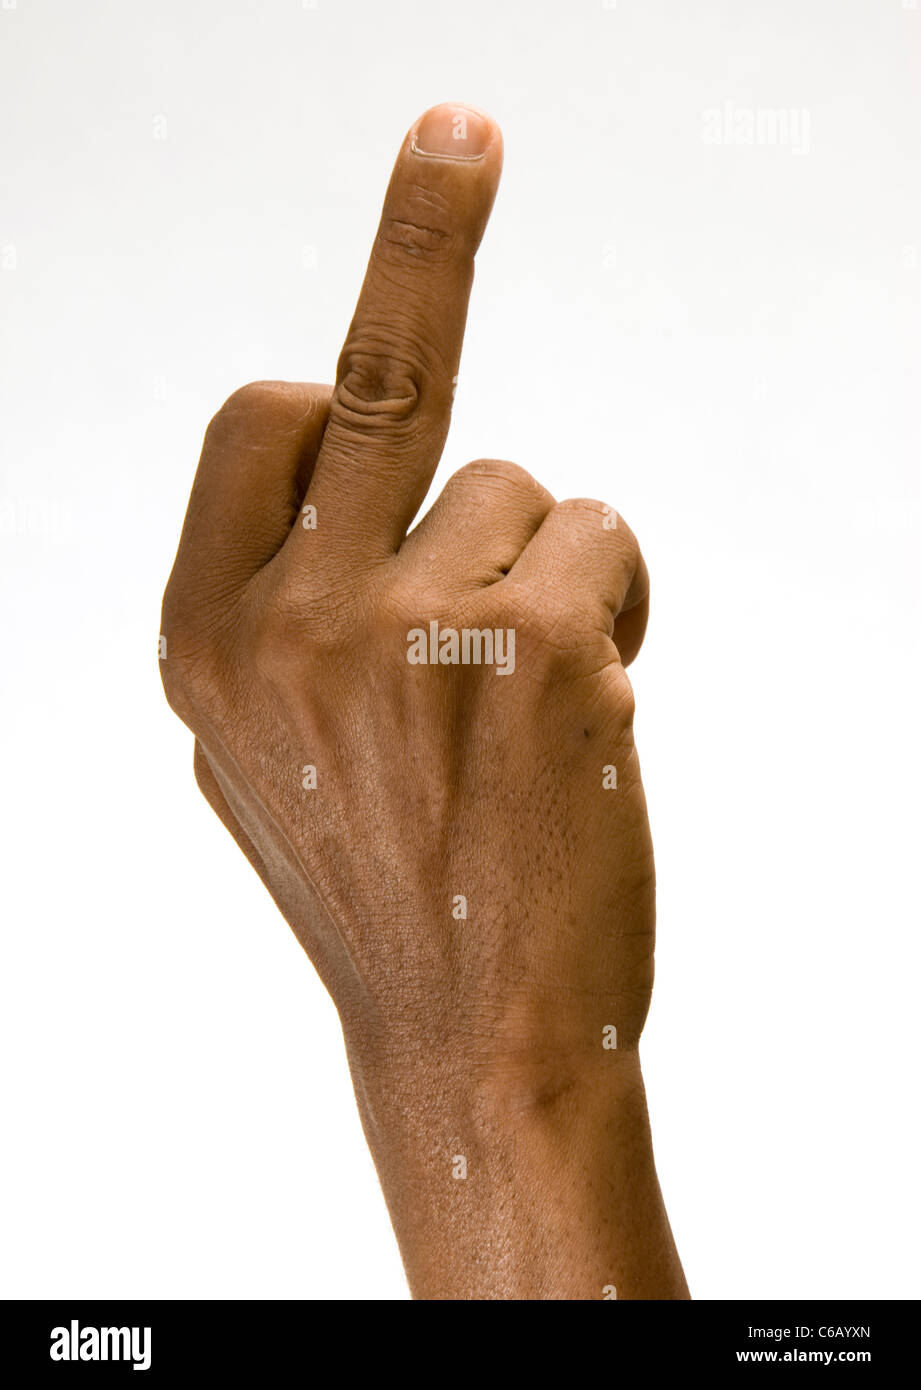 Middle Finger Stock Photo - Download Image Now - Obscene Gesture